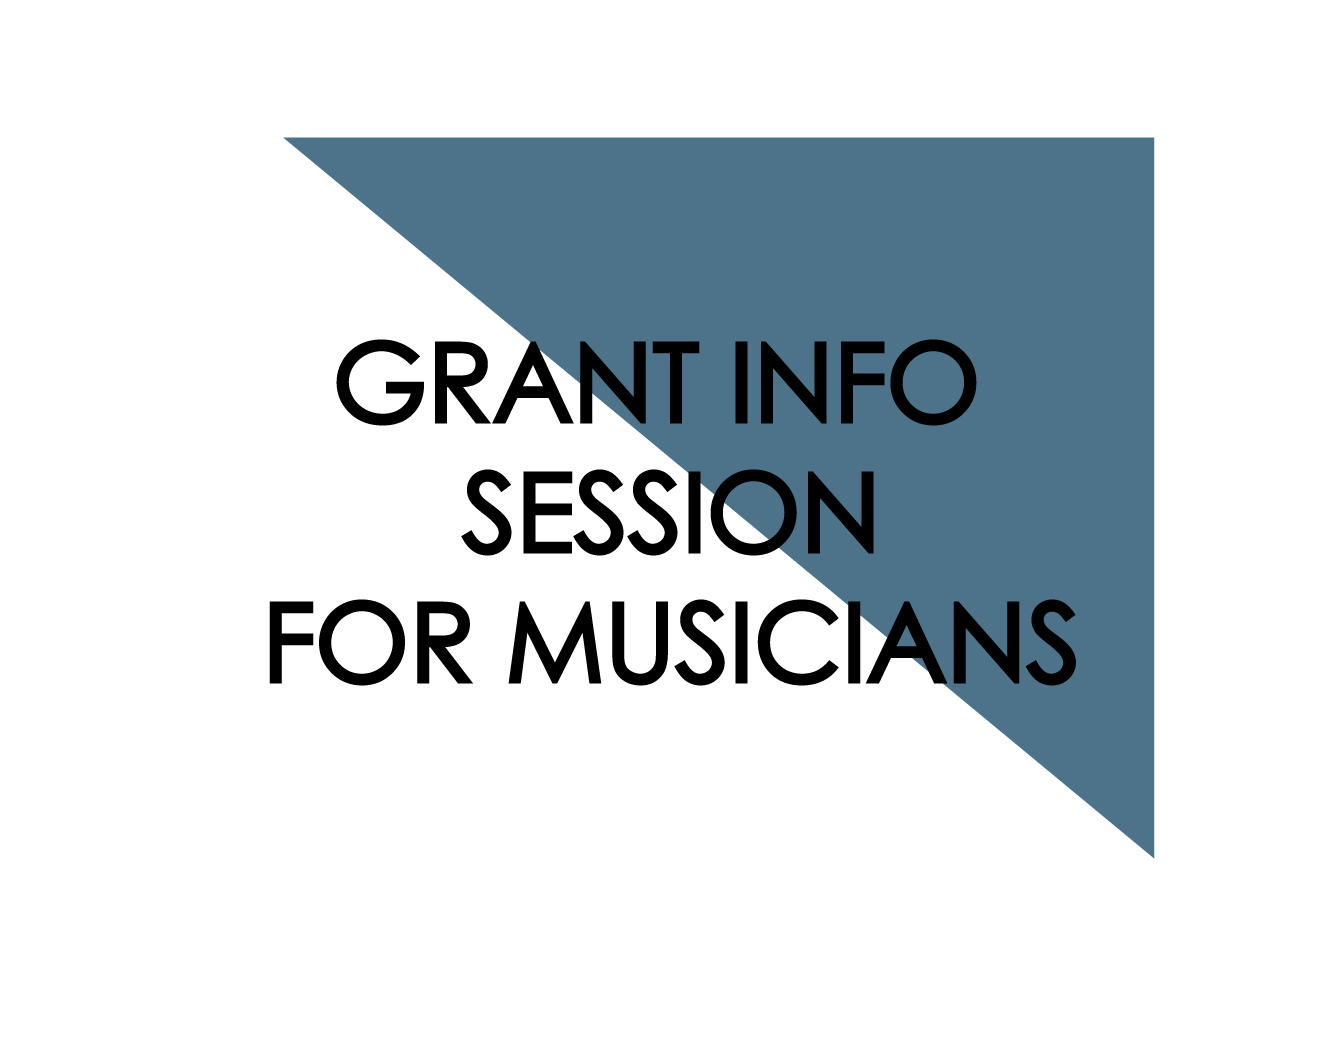 Music Grant Info Session